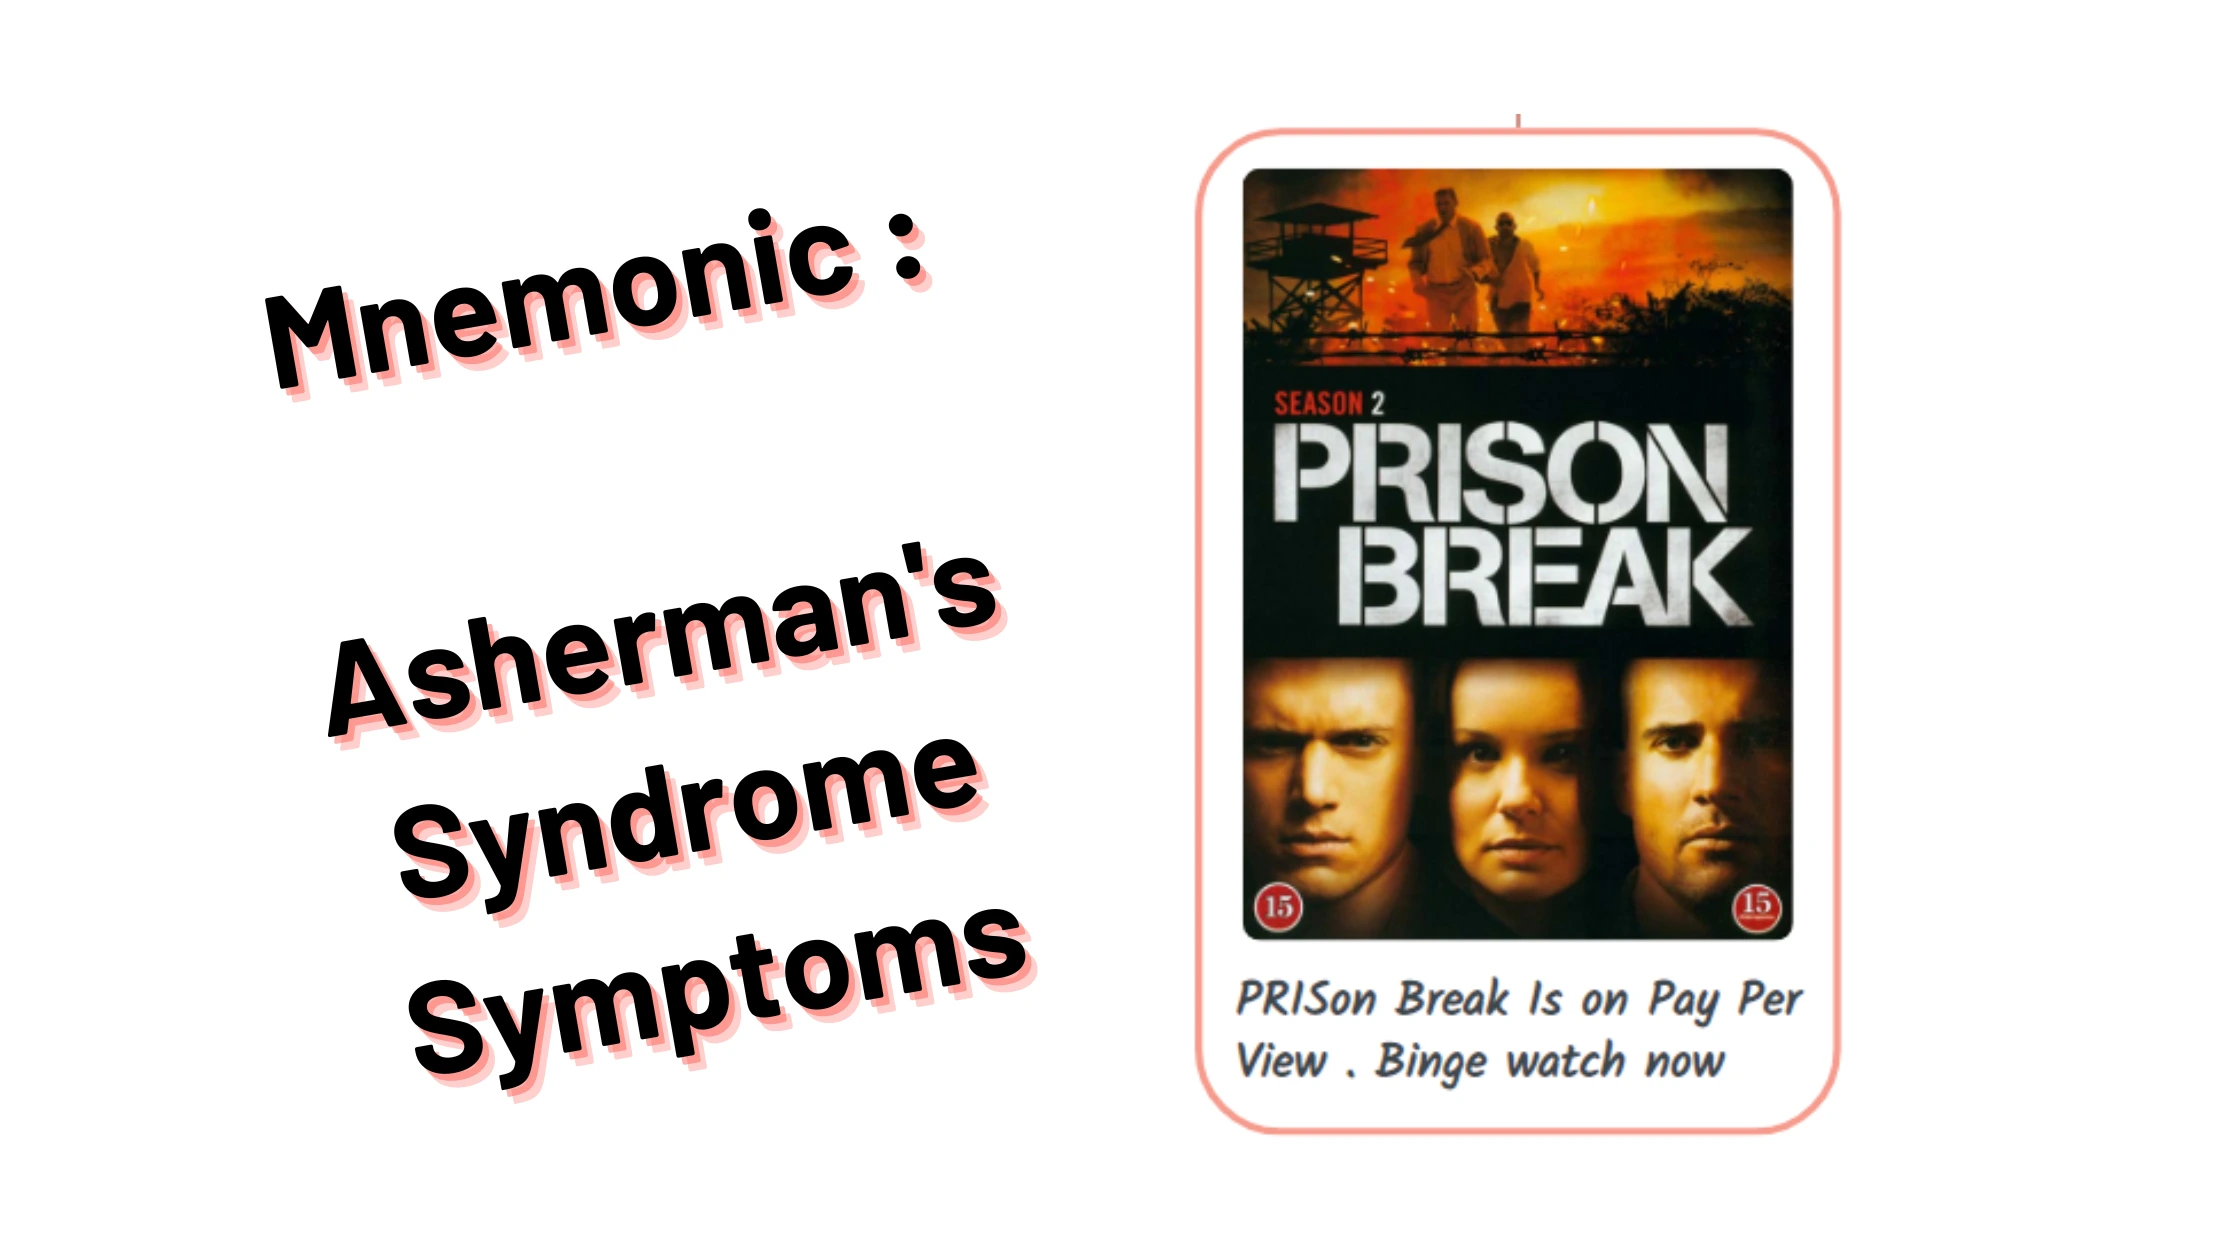 Medical & Nursing Mnemonic _ Ashermans Syndrome Symptoms